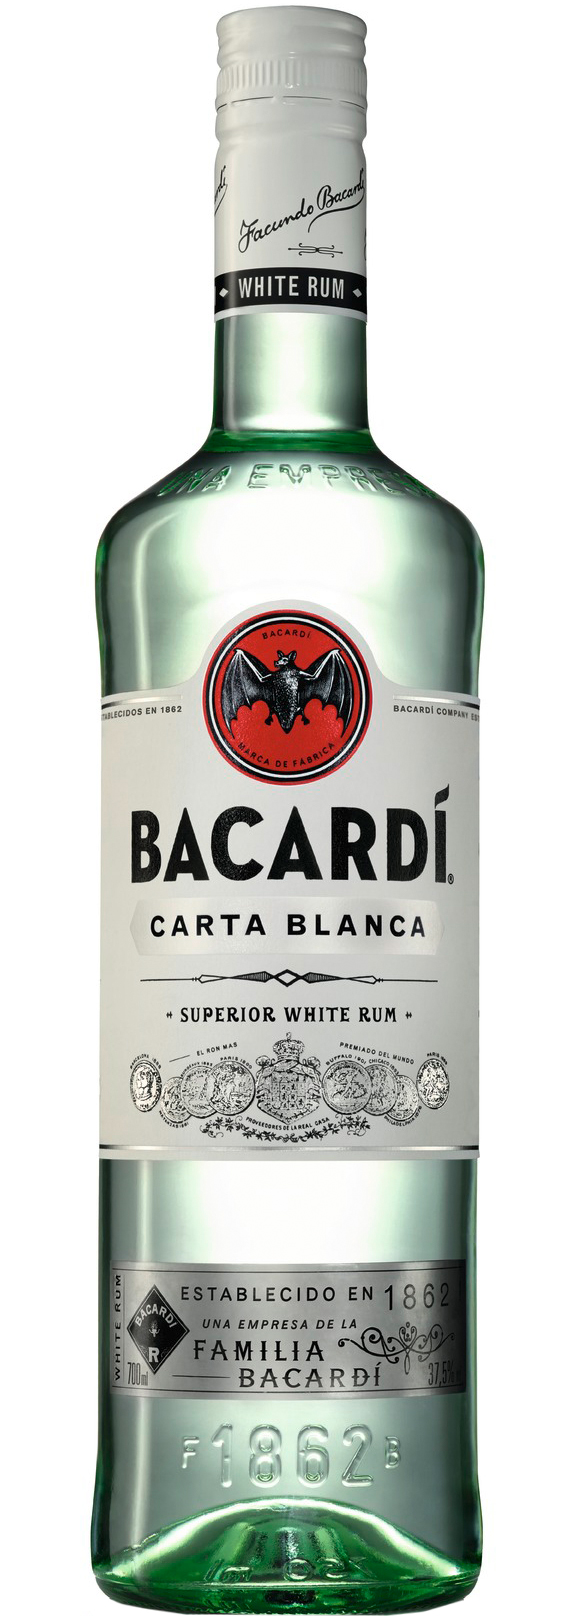 Bacardi Rum Carta Blanca 0,7L